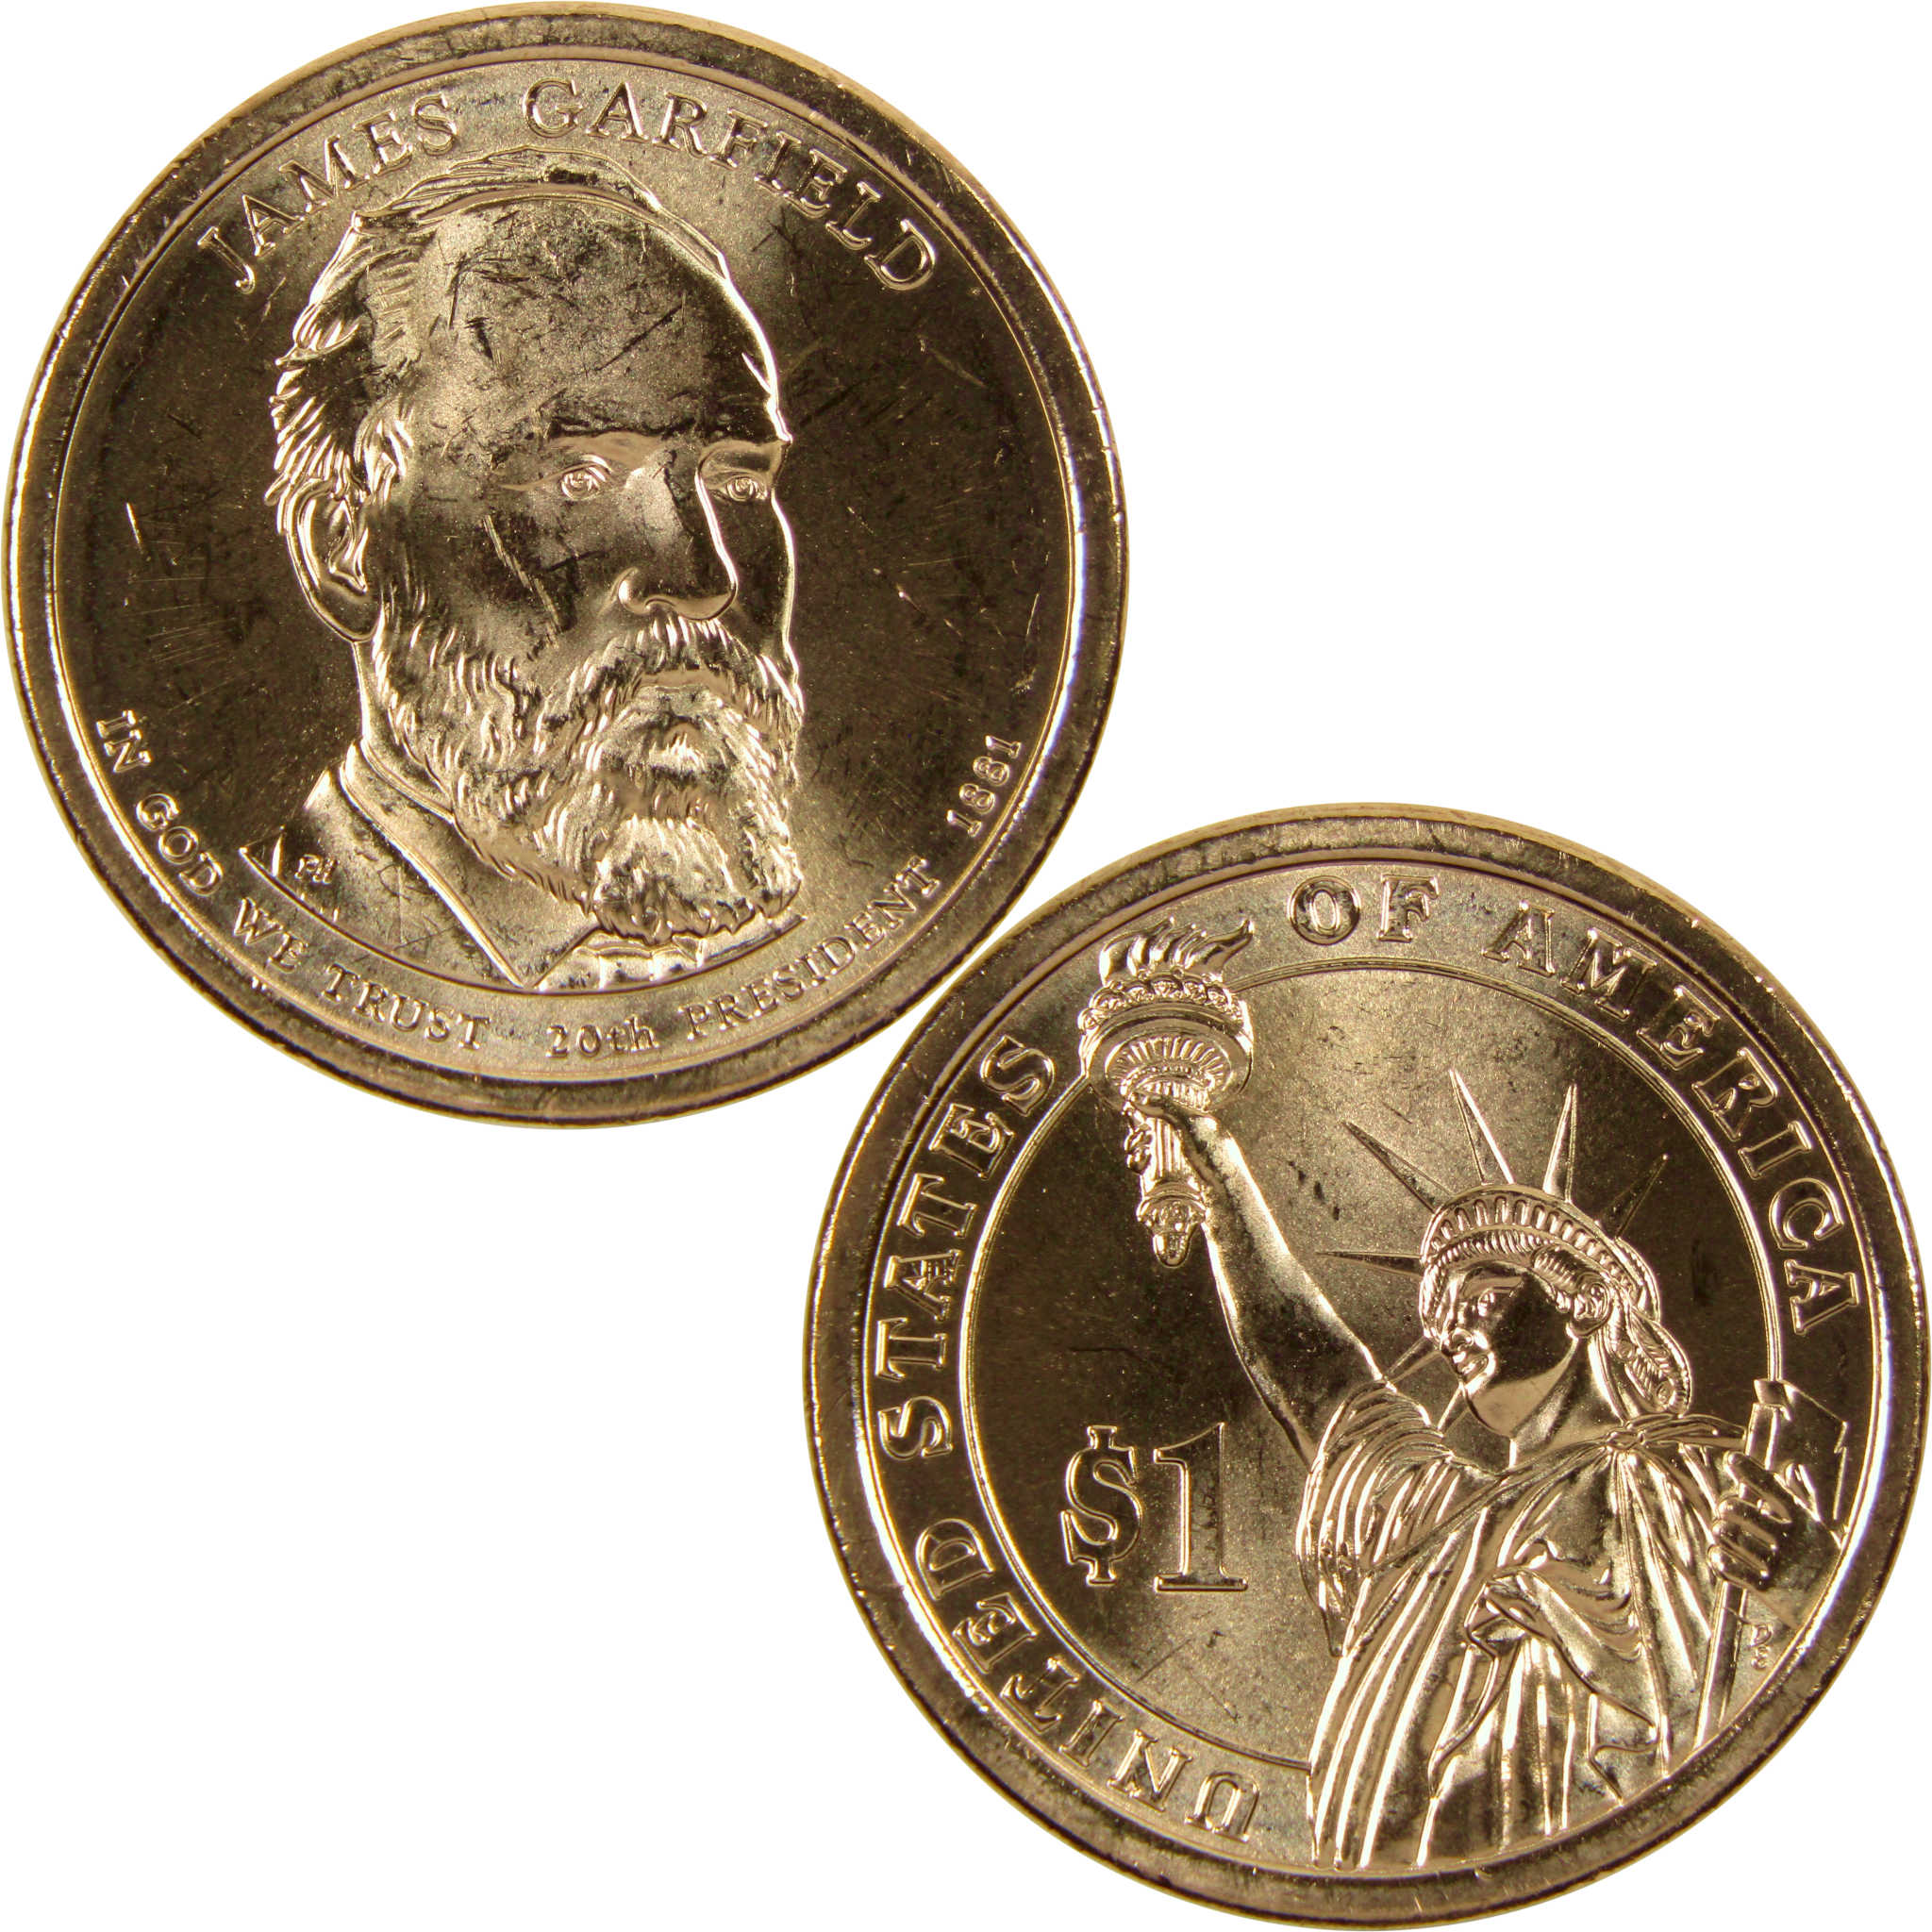 2011 D James A Garfield Presidential Dollar BU Uncirculated $1 Coin